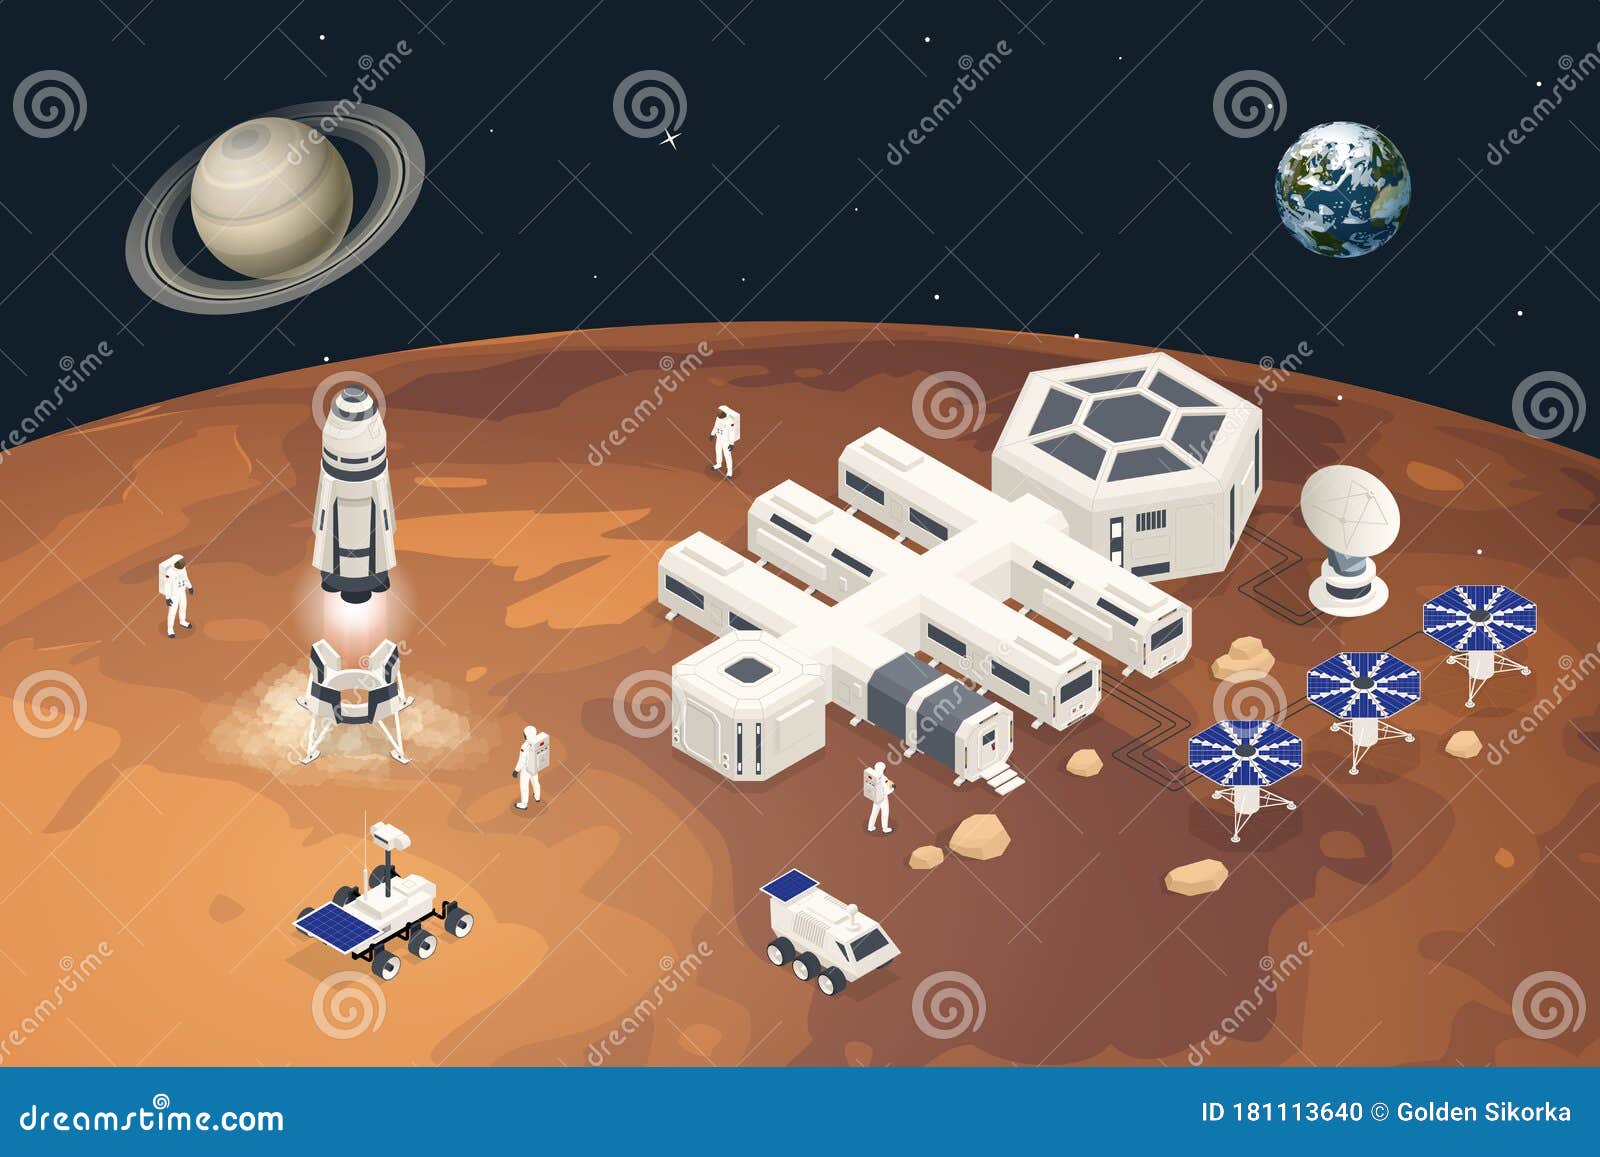 isometric mars colonization, biological terraforming, paraterraforming, adapting humans on mars. astronautics, space